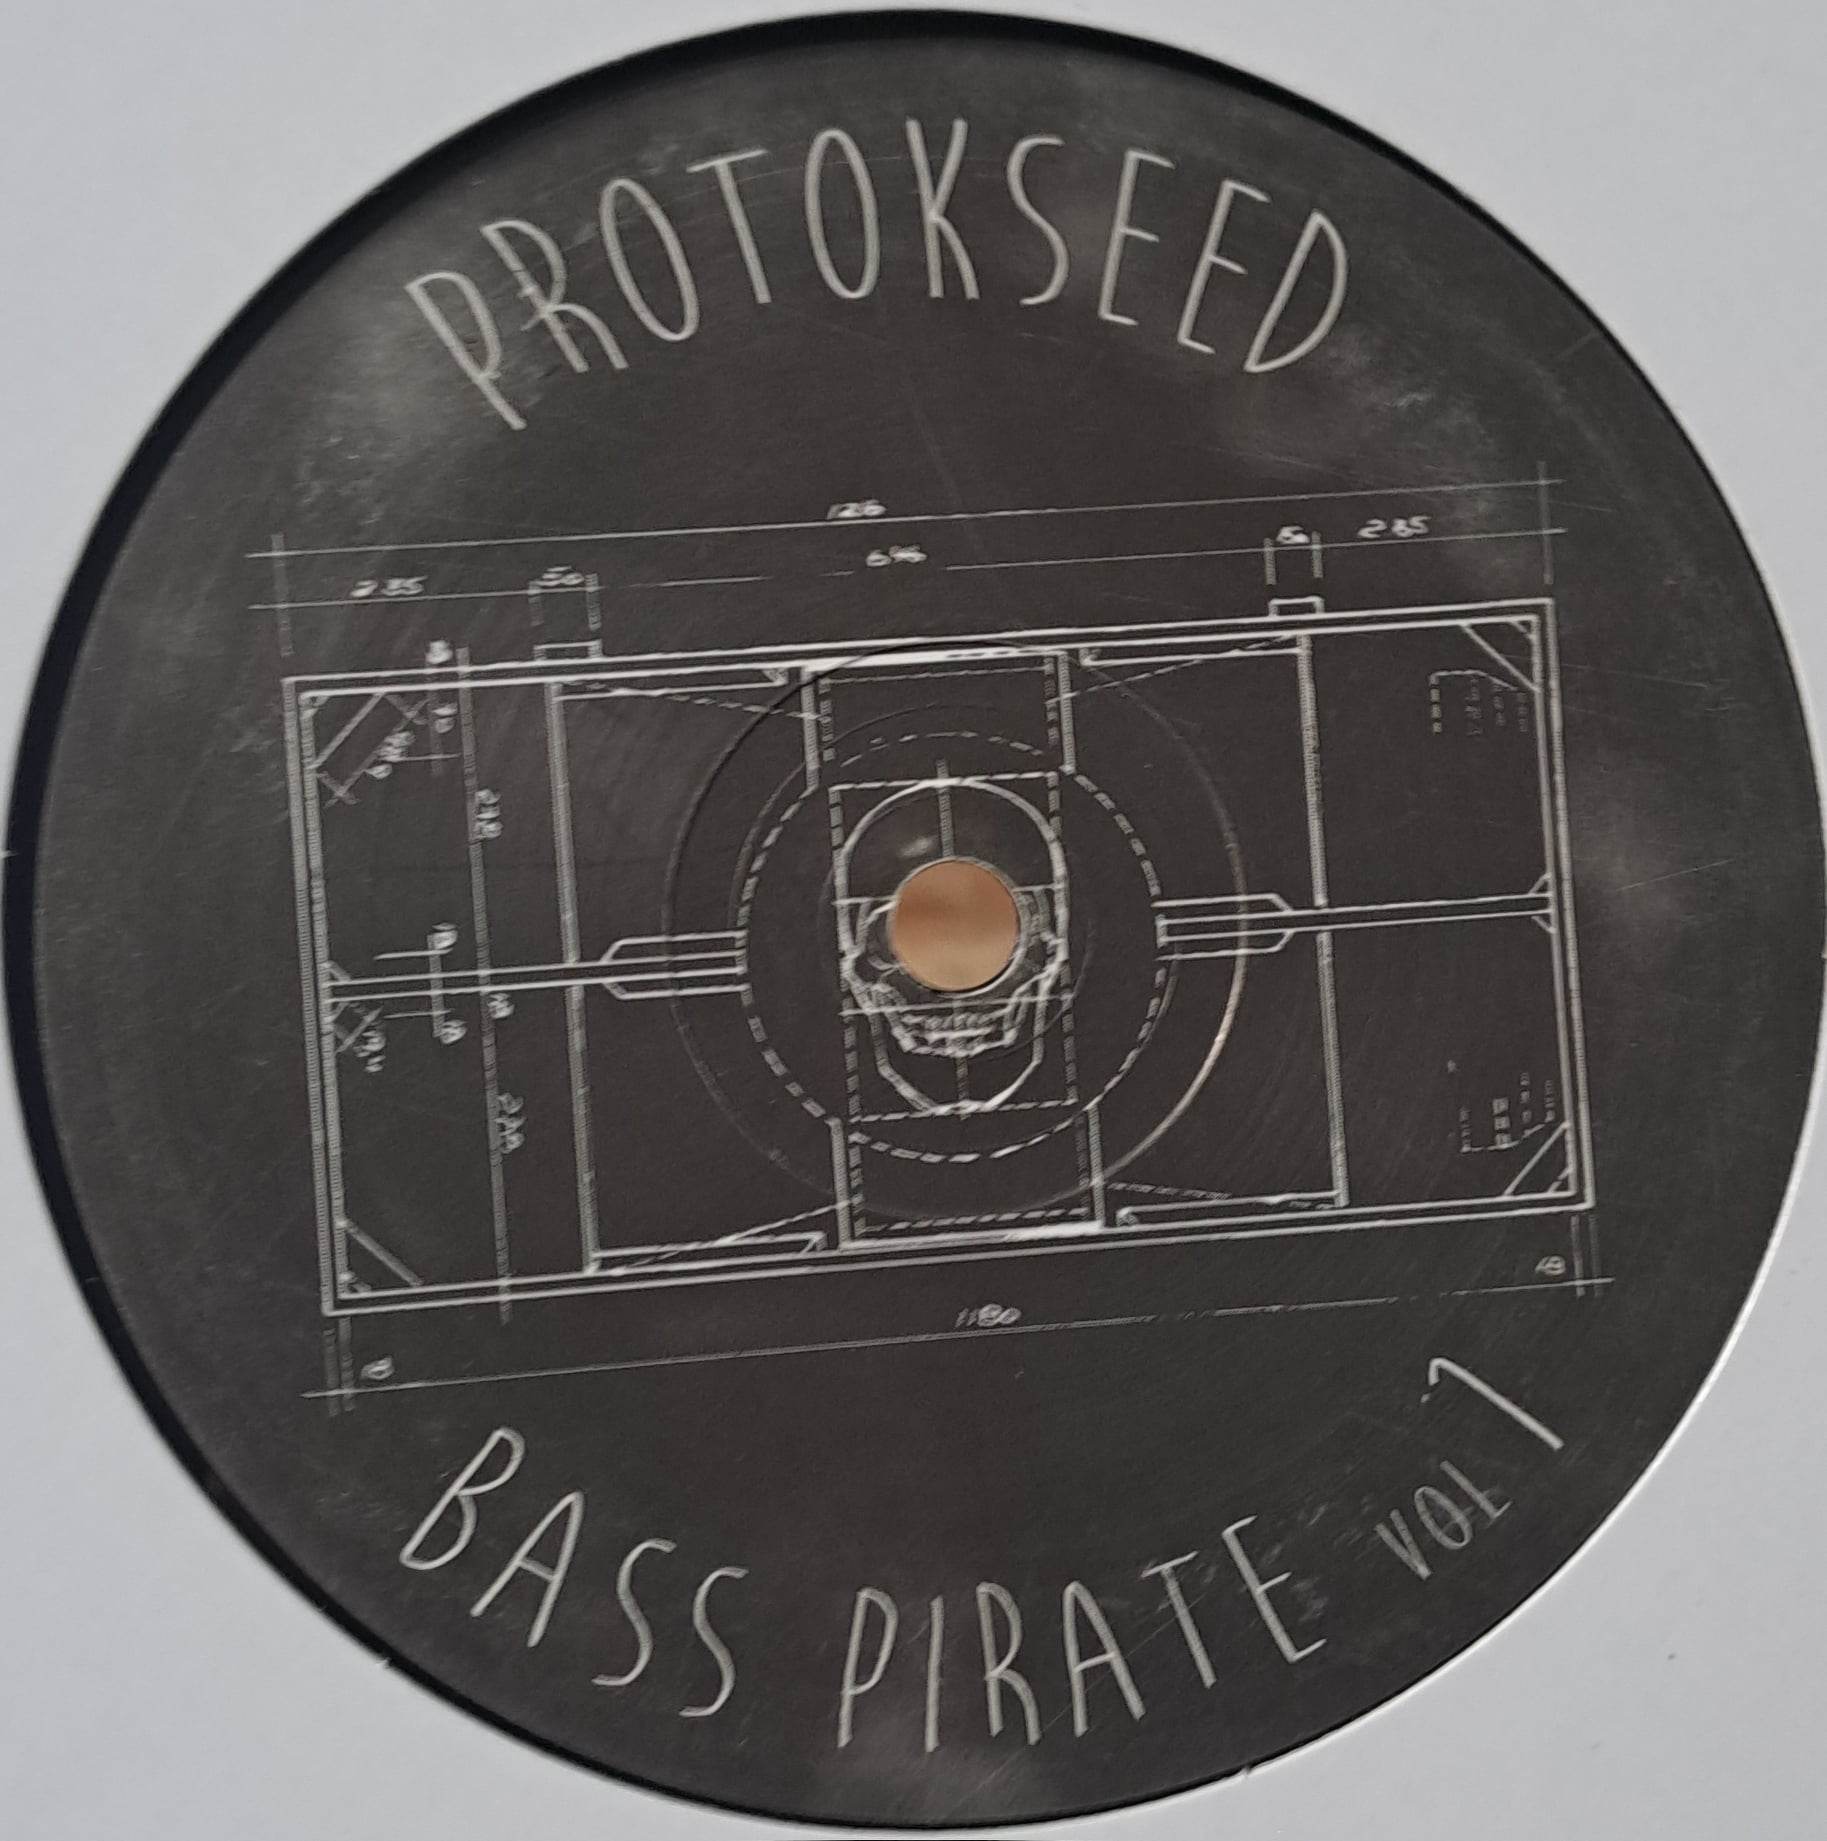 Bass Pirate vol. 01 - vinyle hard techno